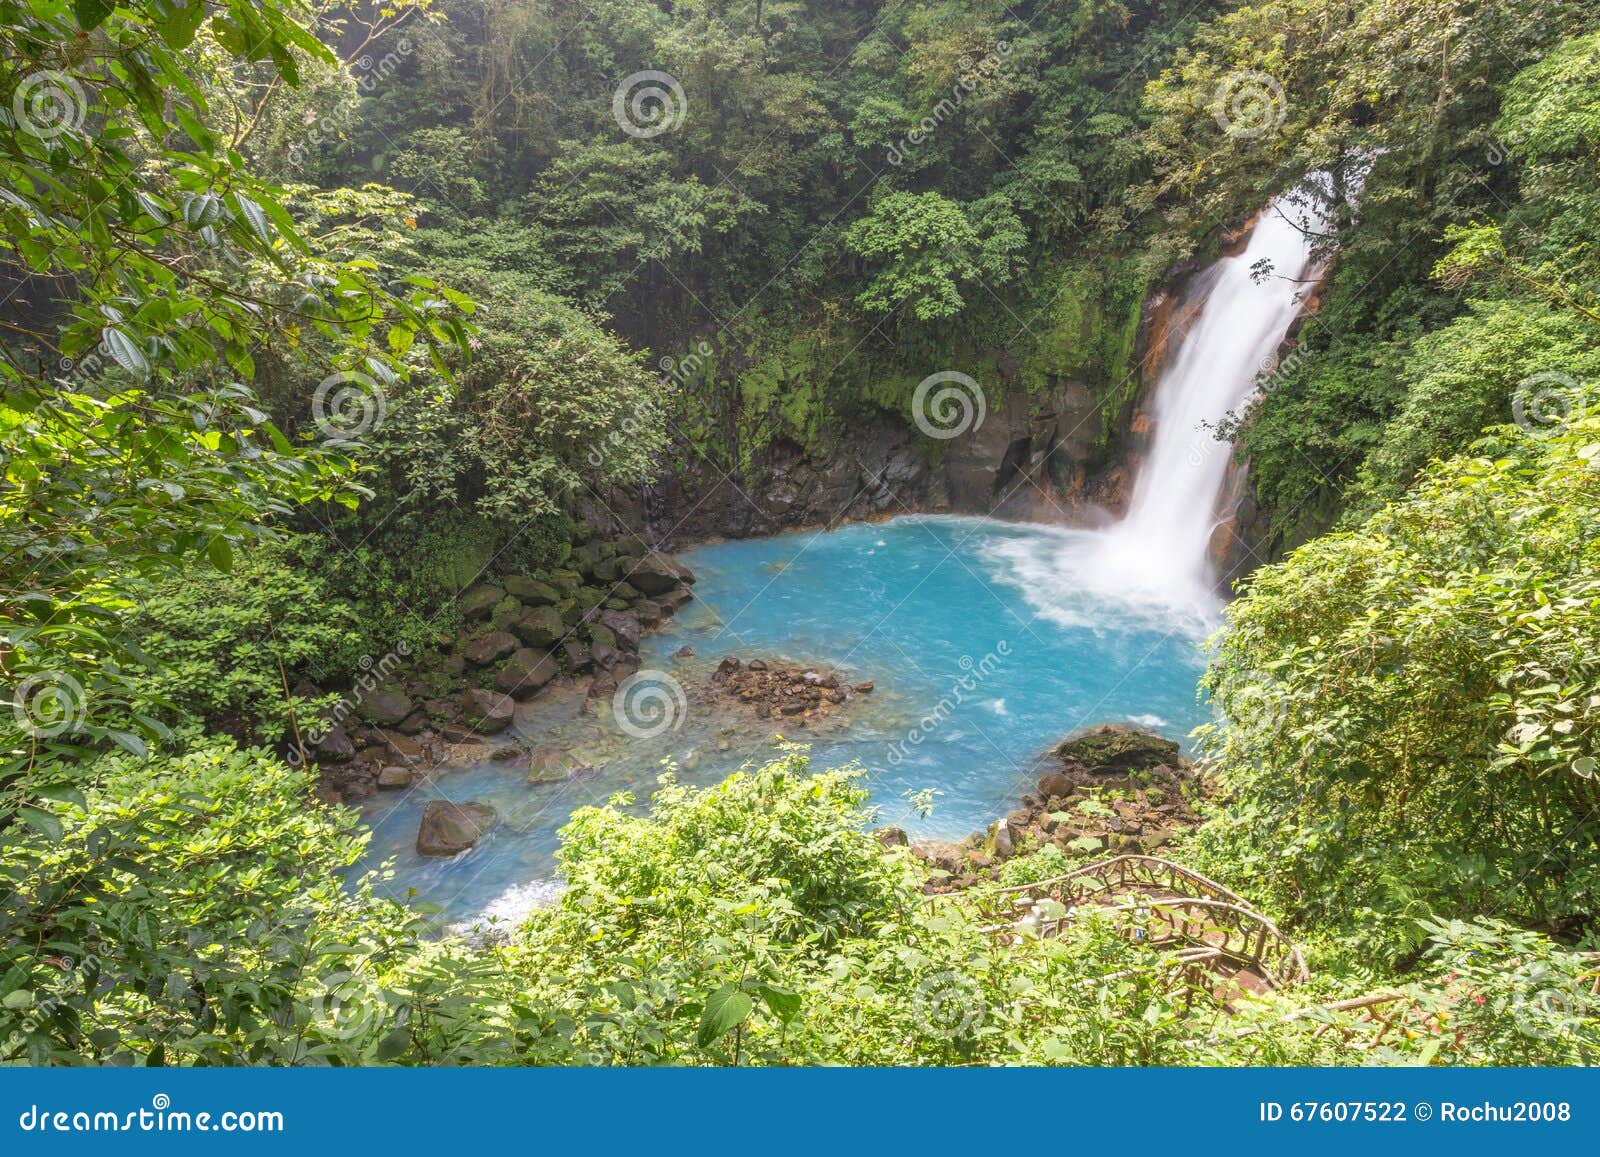 blue waterfall in costa rica